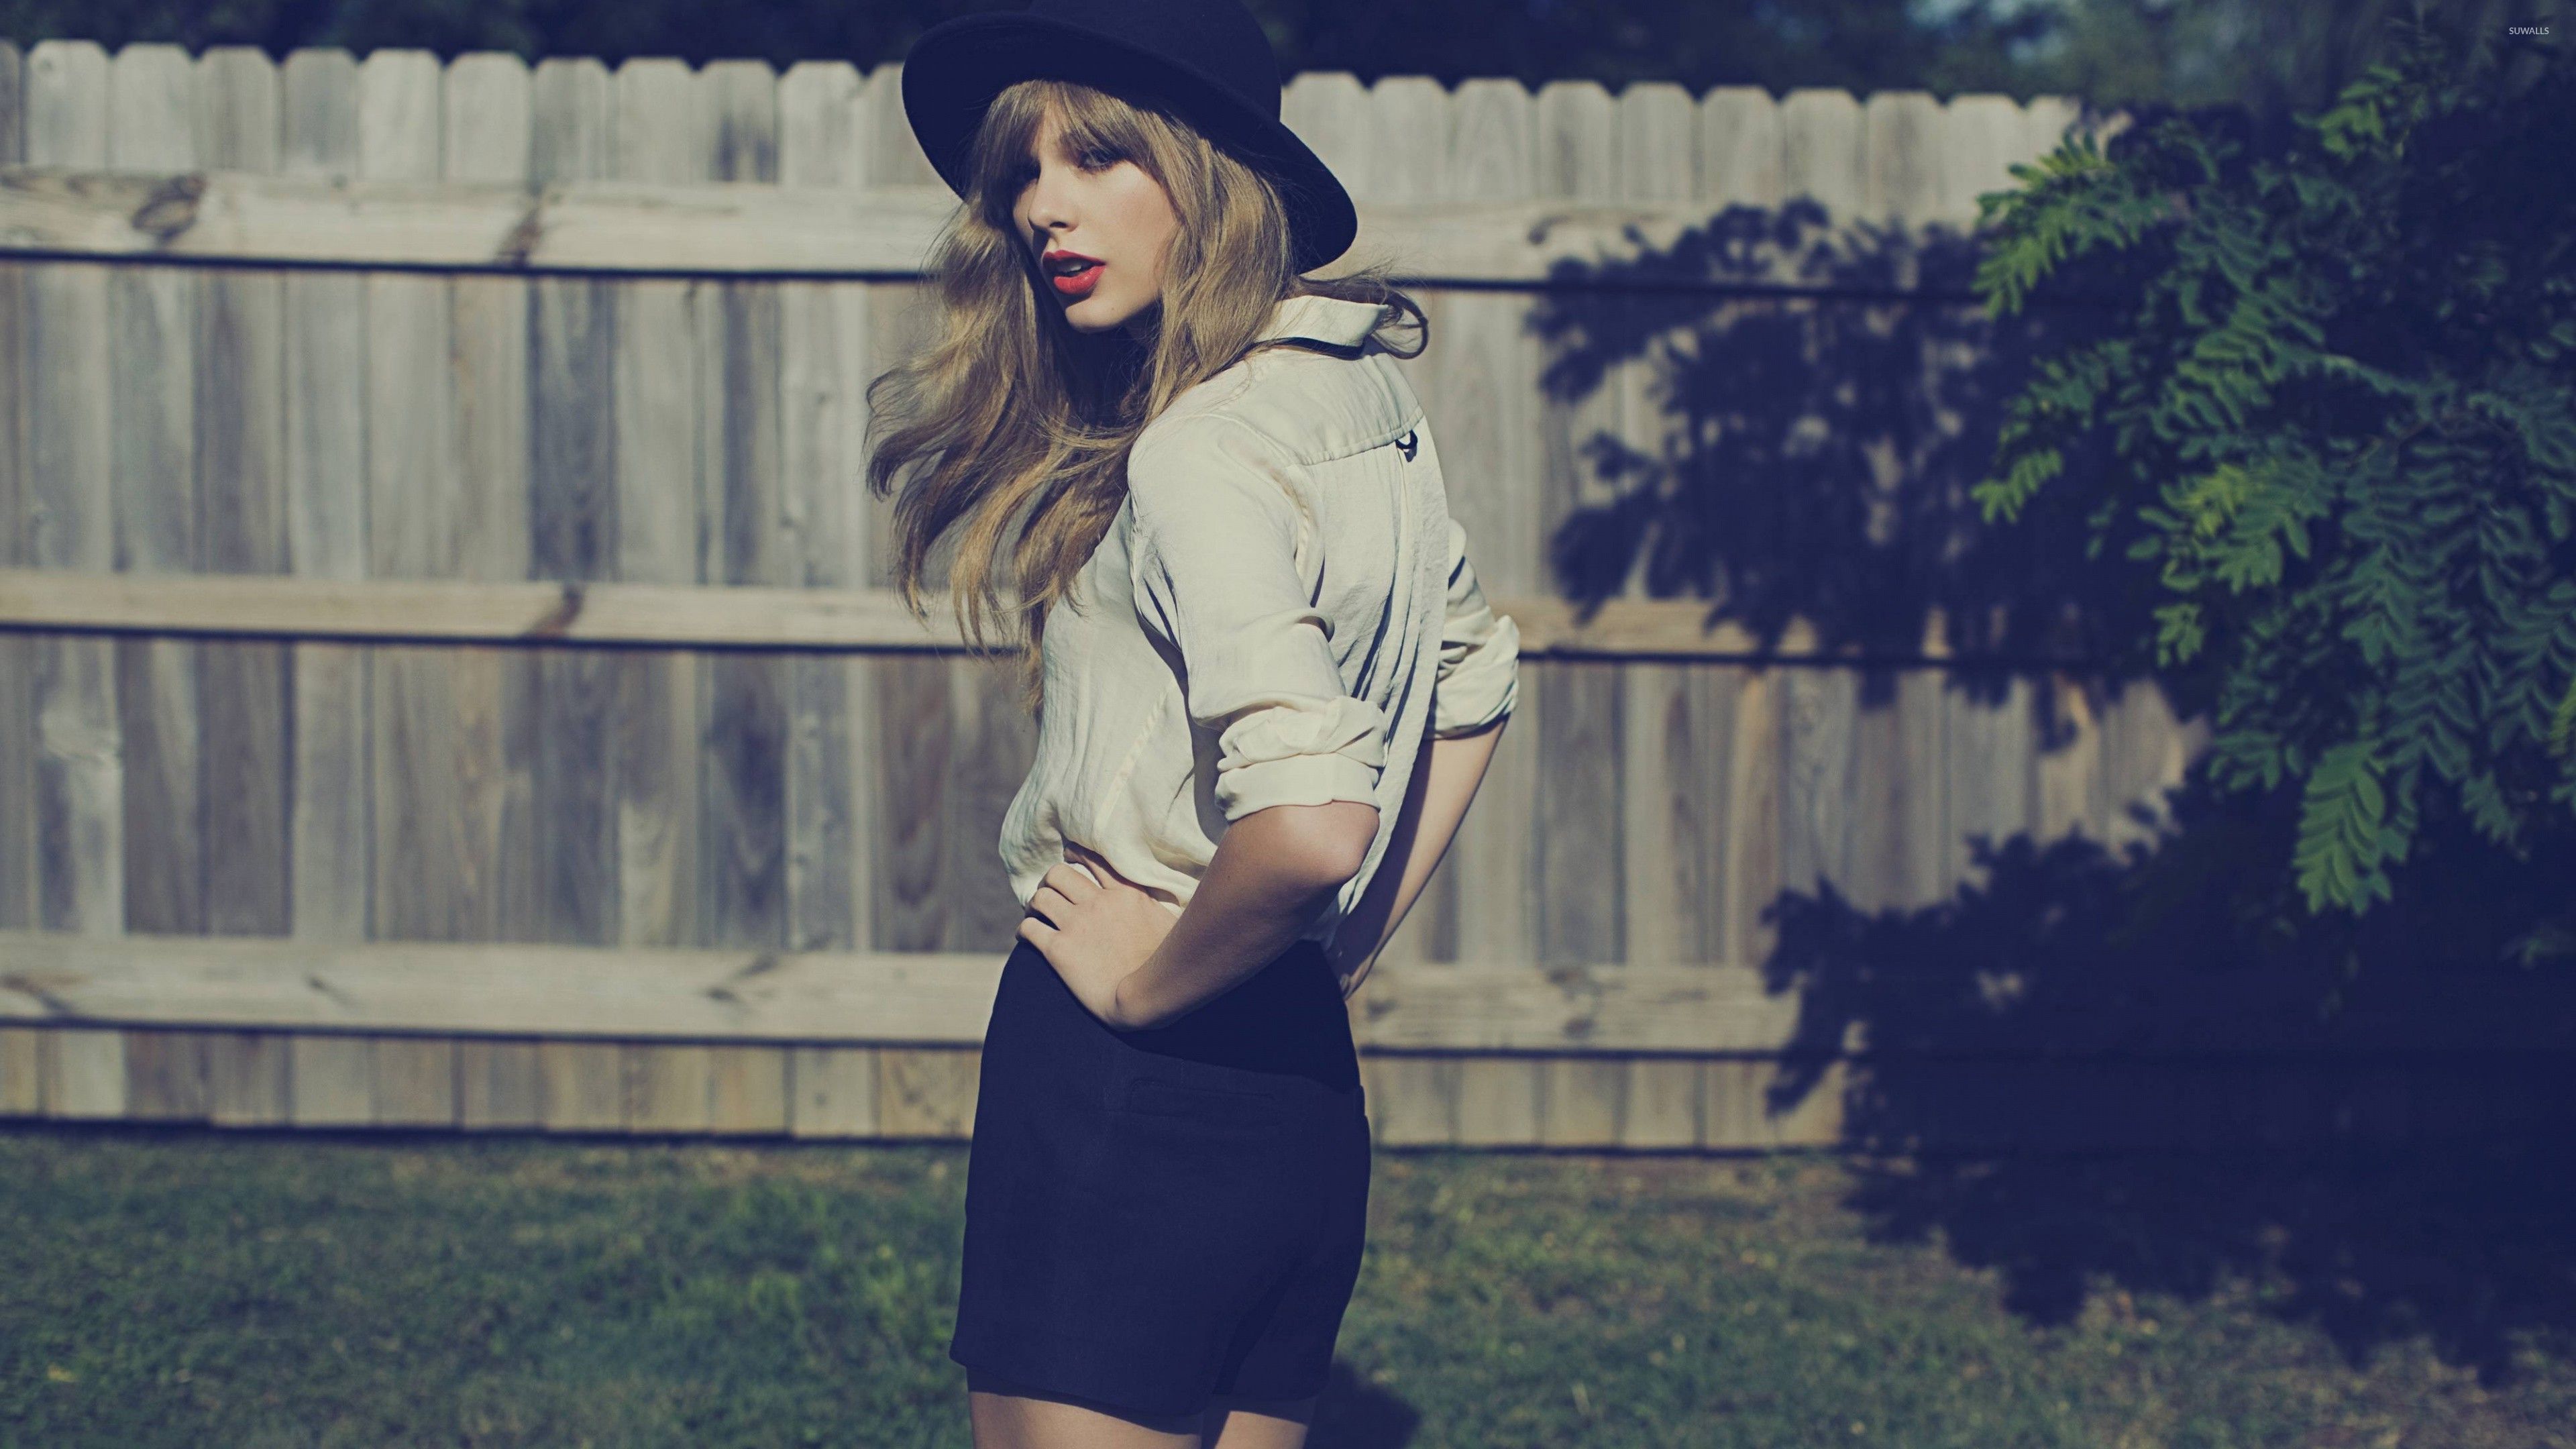 Taylor Swift 6 Wallpaper Celebrity Wallpapers